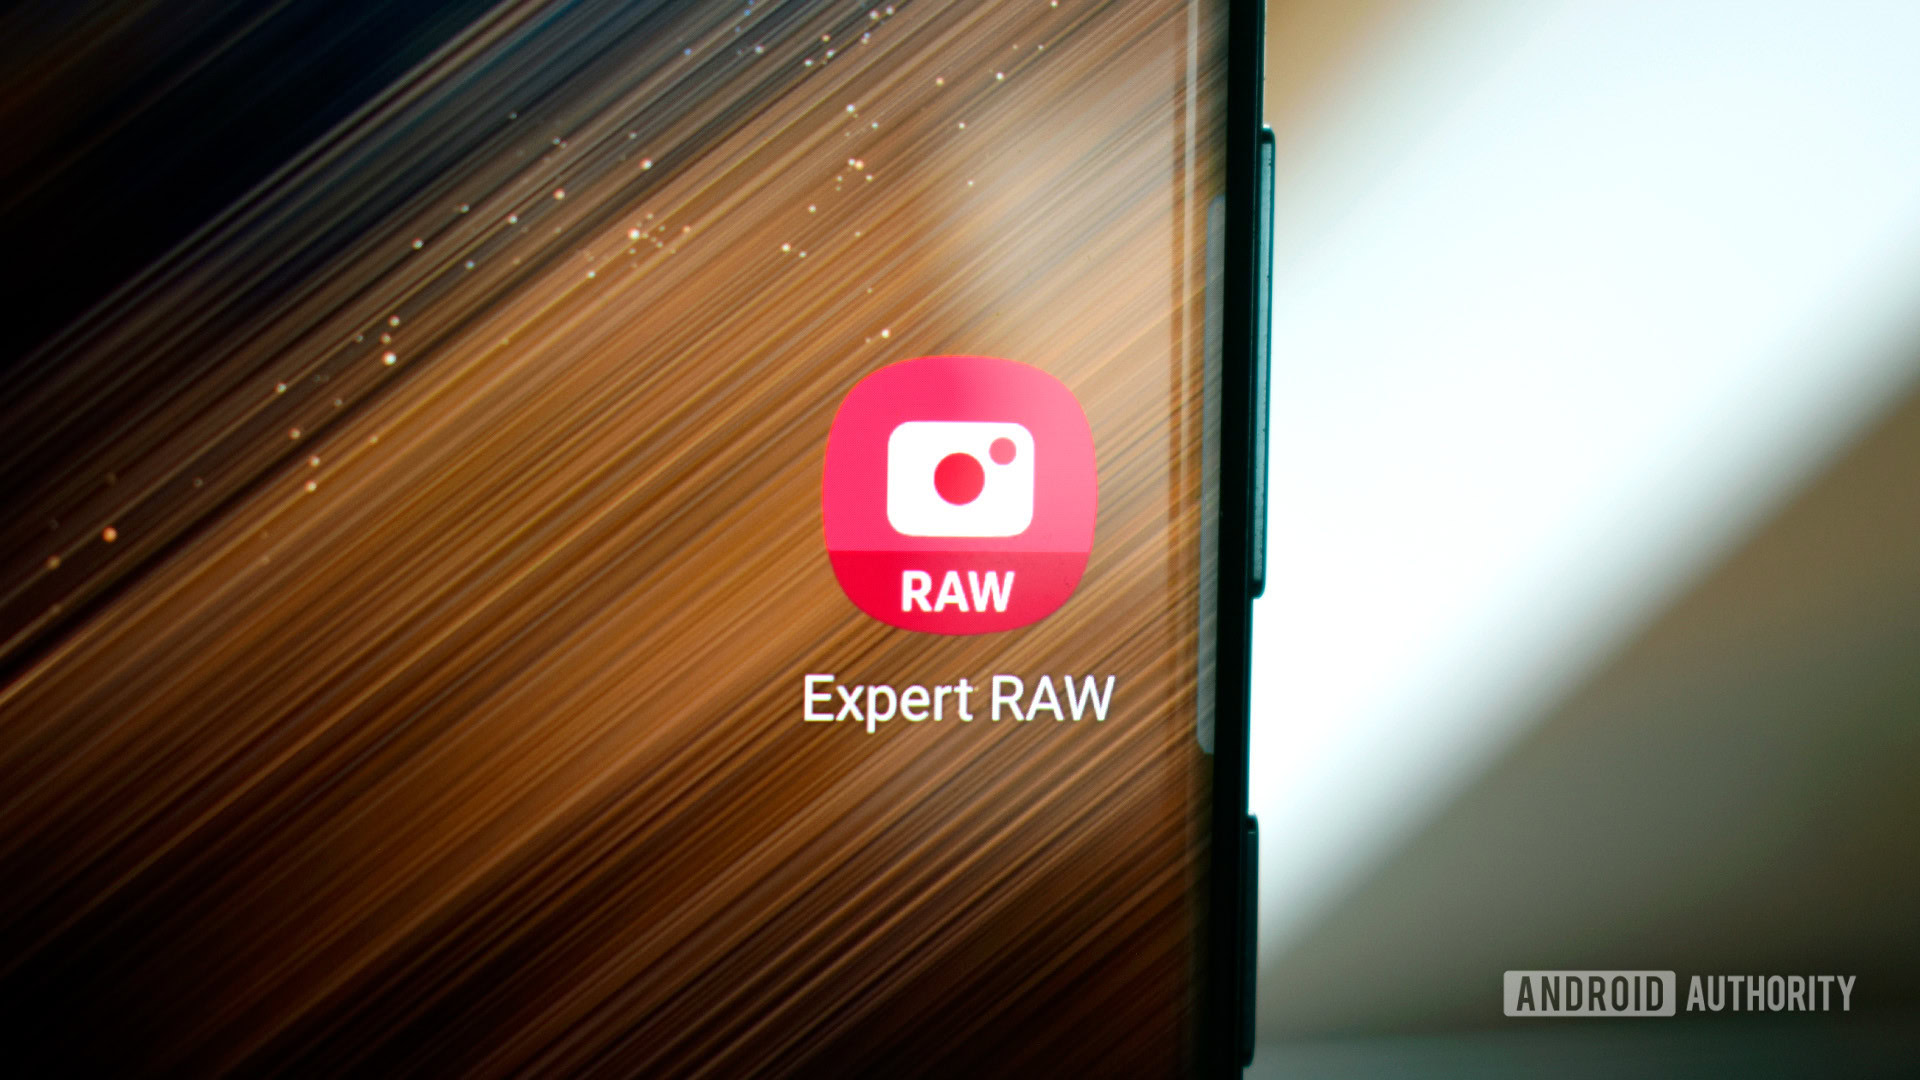 Samsung Expert RAW app logo